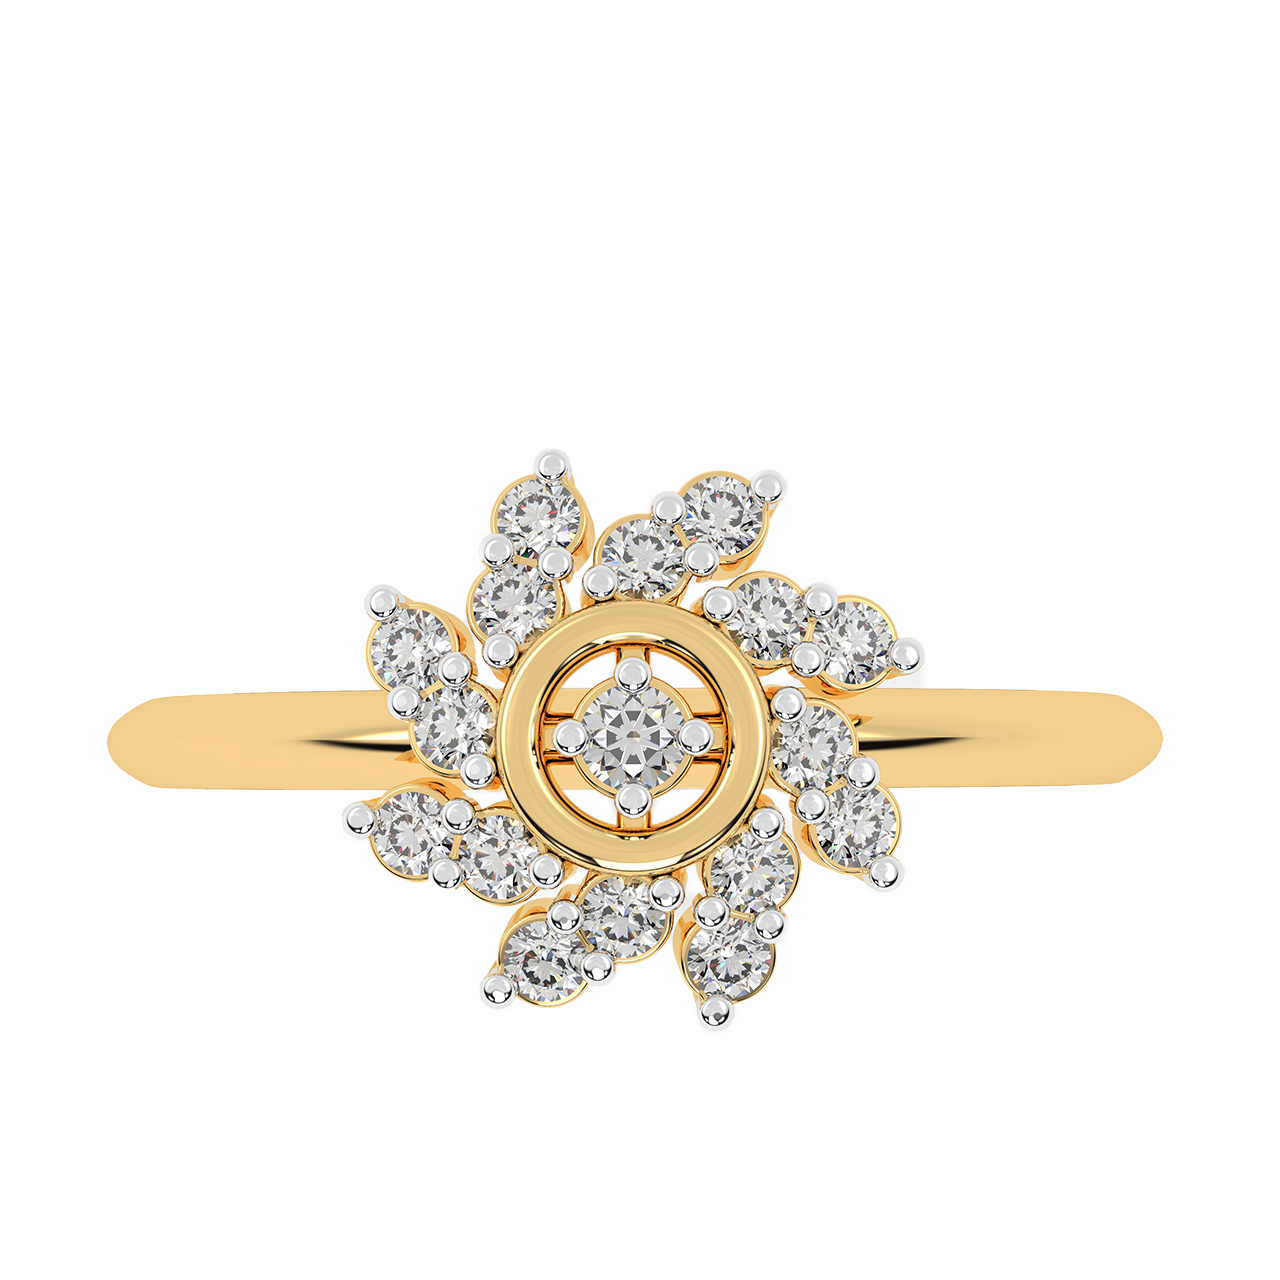 Blossom Design Diamond Ring